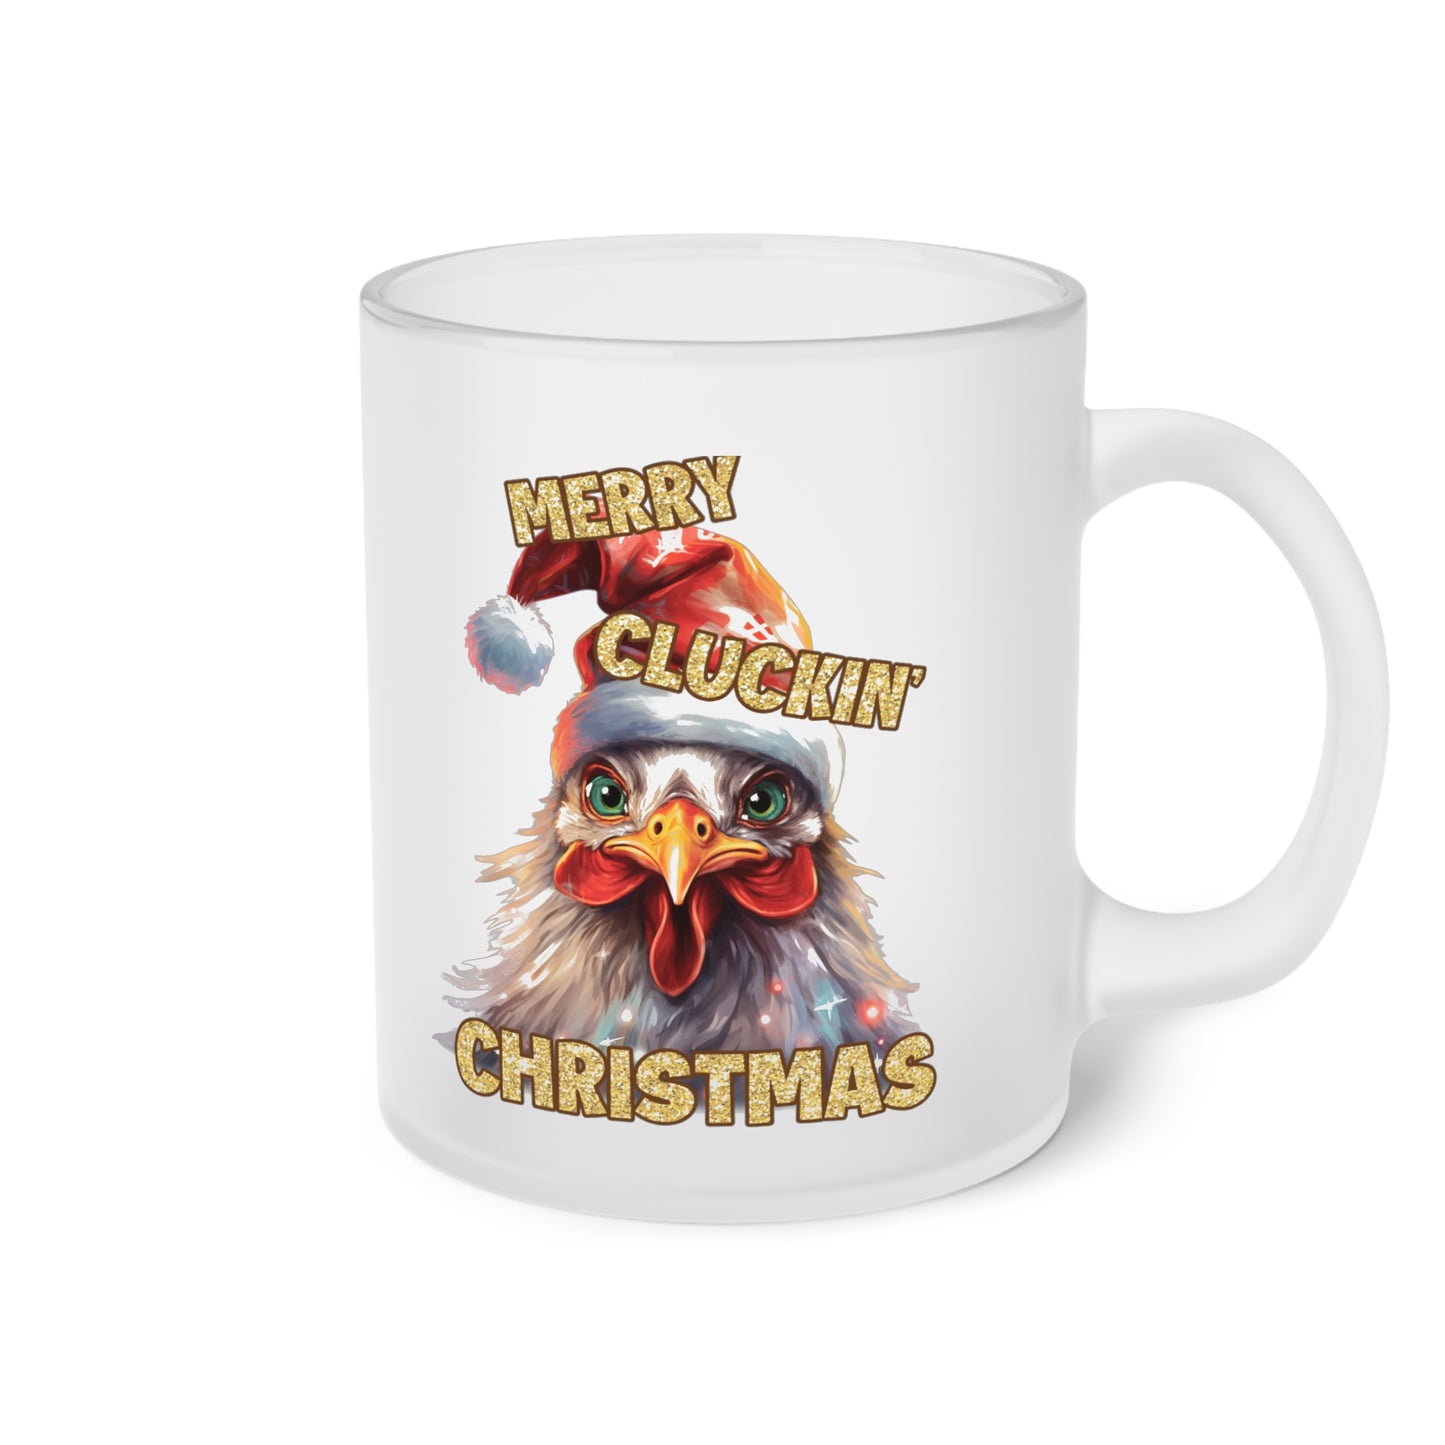 Frosted Glass Mug, Cute Christmas Mug, Chicken Themed Holiday Mug, Frosted Mug, Cute Coffee Mug, Holiday Coffee Mug, Frosted Holiday Coffee Mug